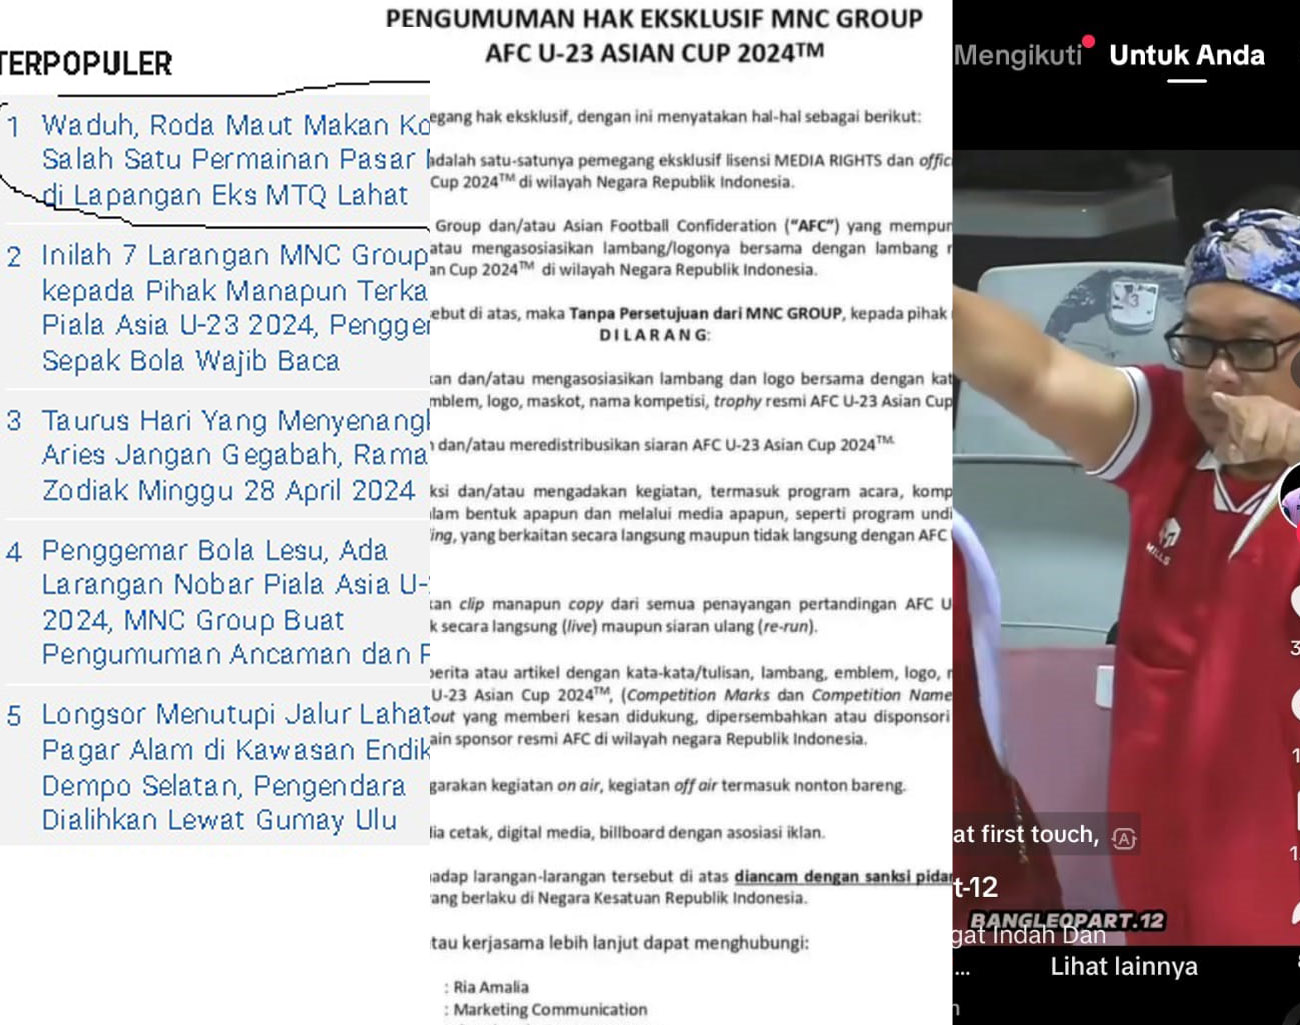 Inilah 2 Alasan MNC Group Melarang Nonton Bareng (Nobar) Piala Asia U-23 2024, Penggemar Sepak Bola Wajib Baca